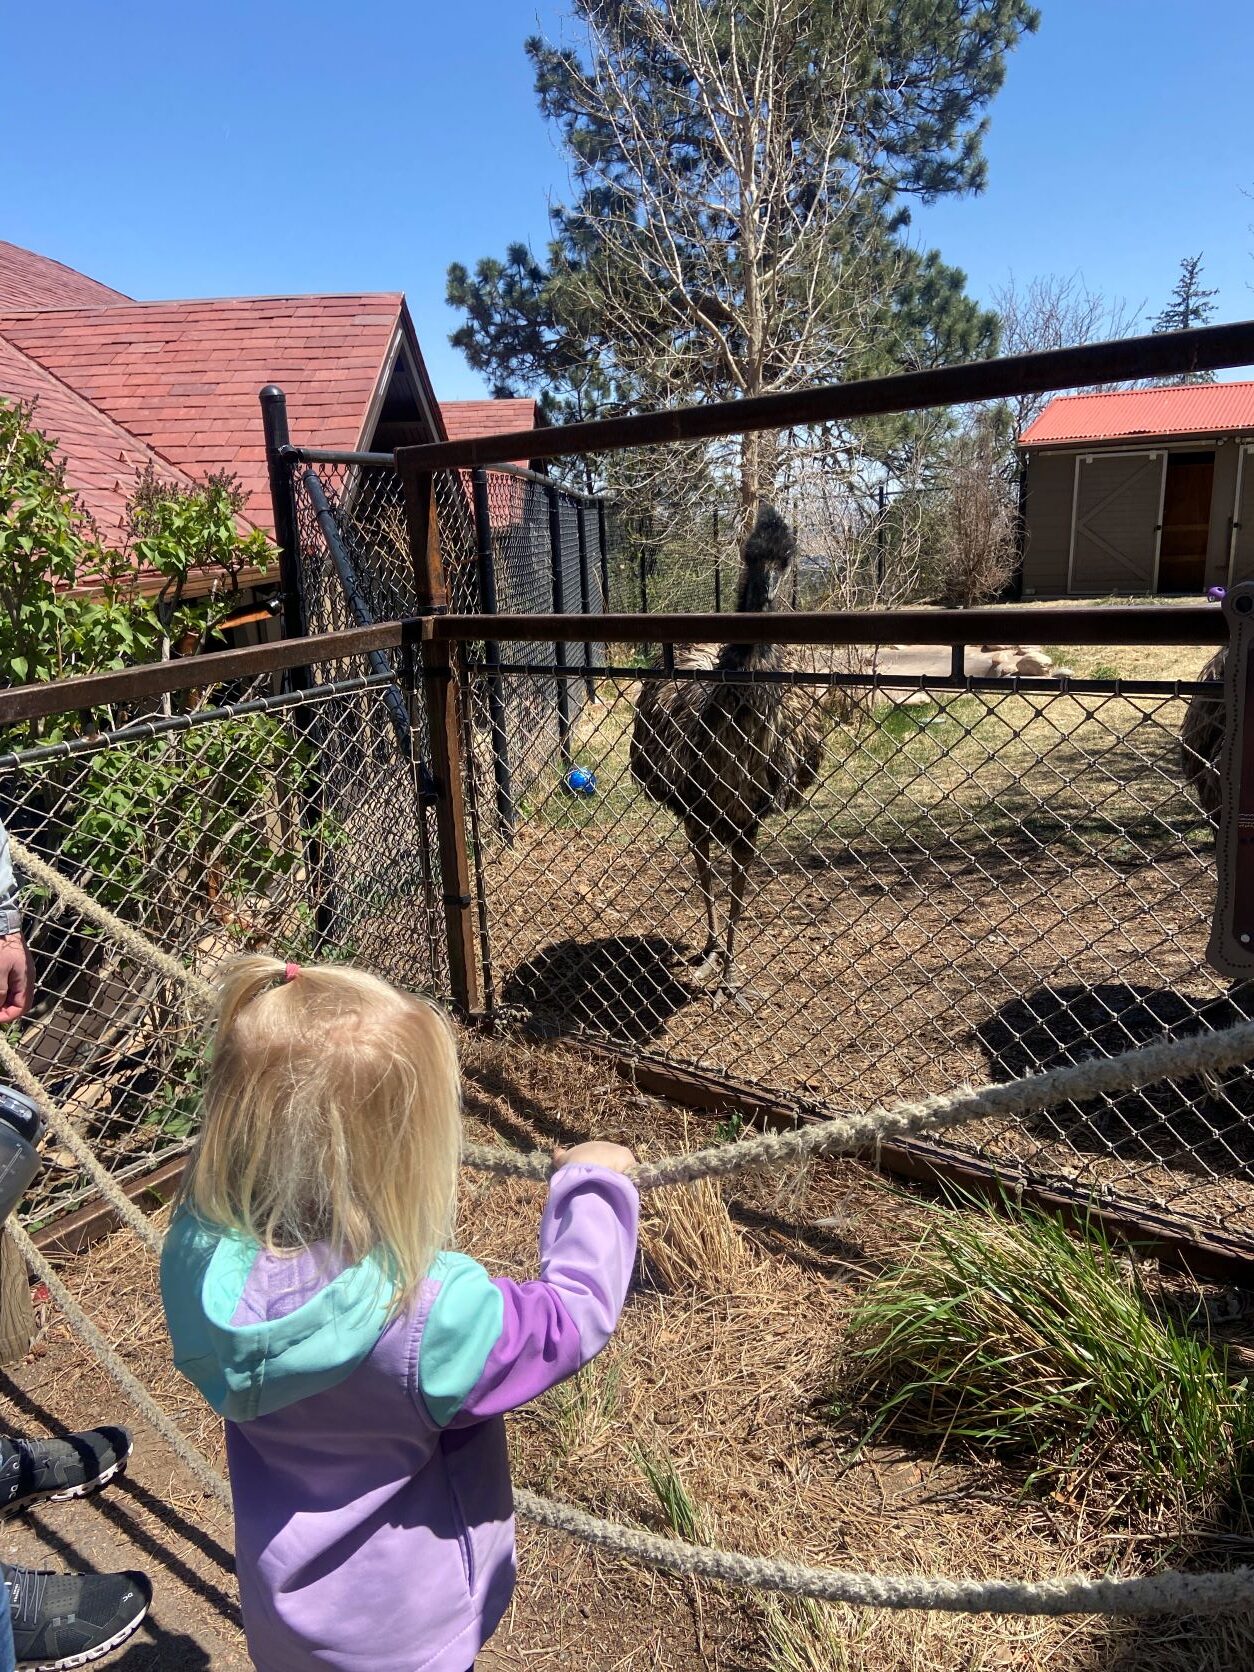 Emu at the Zoo